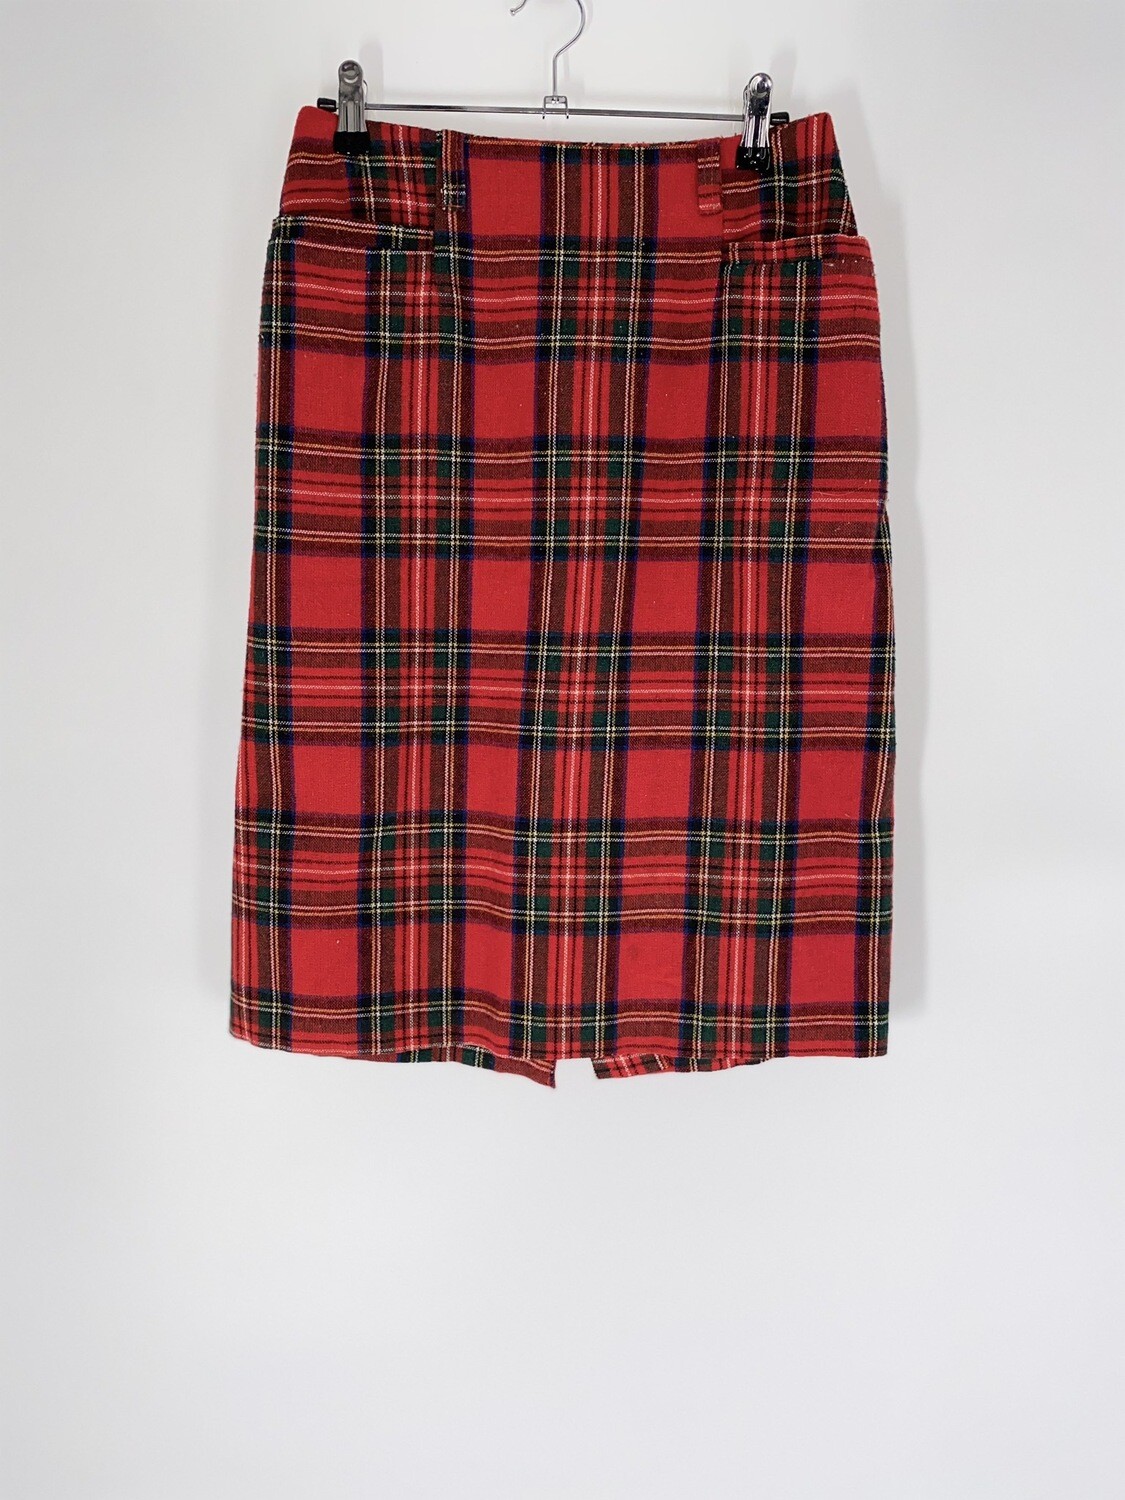 A. Byer Plaid Skirt Size M